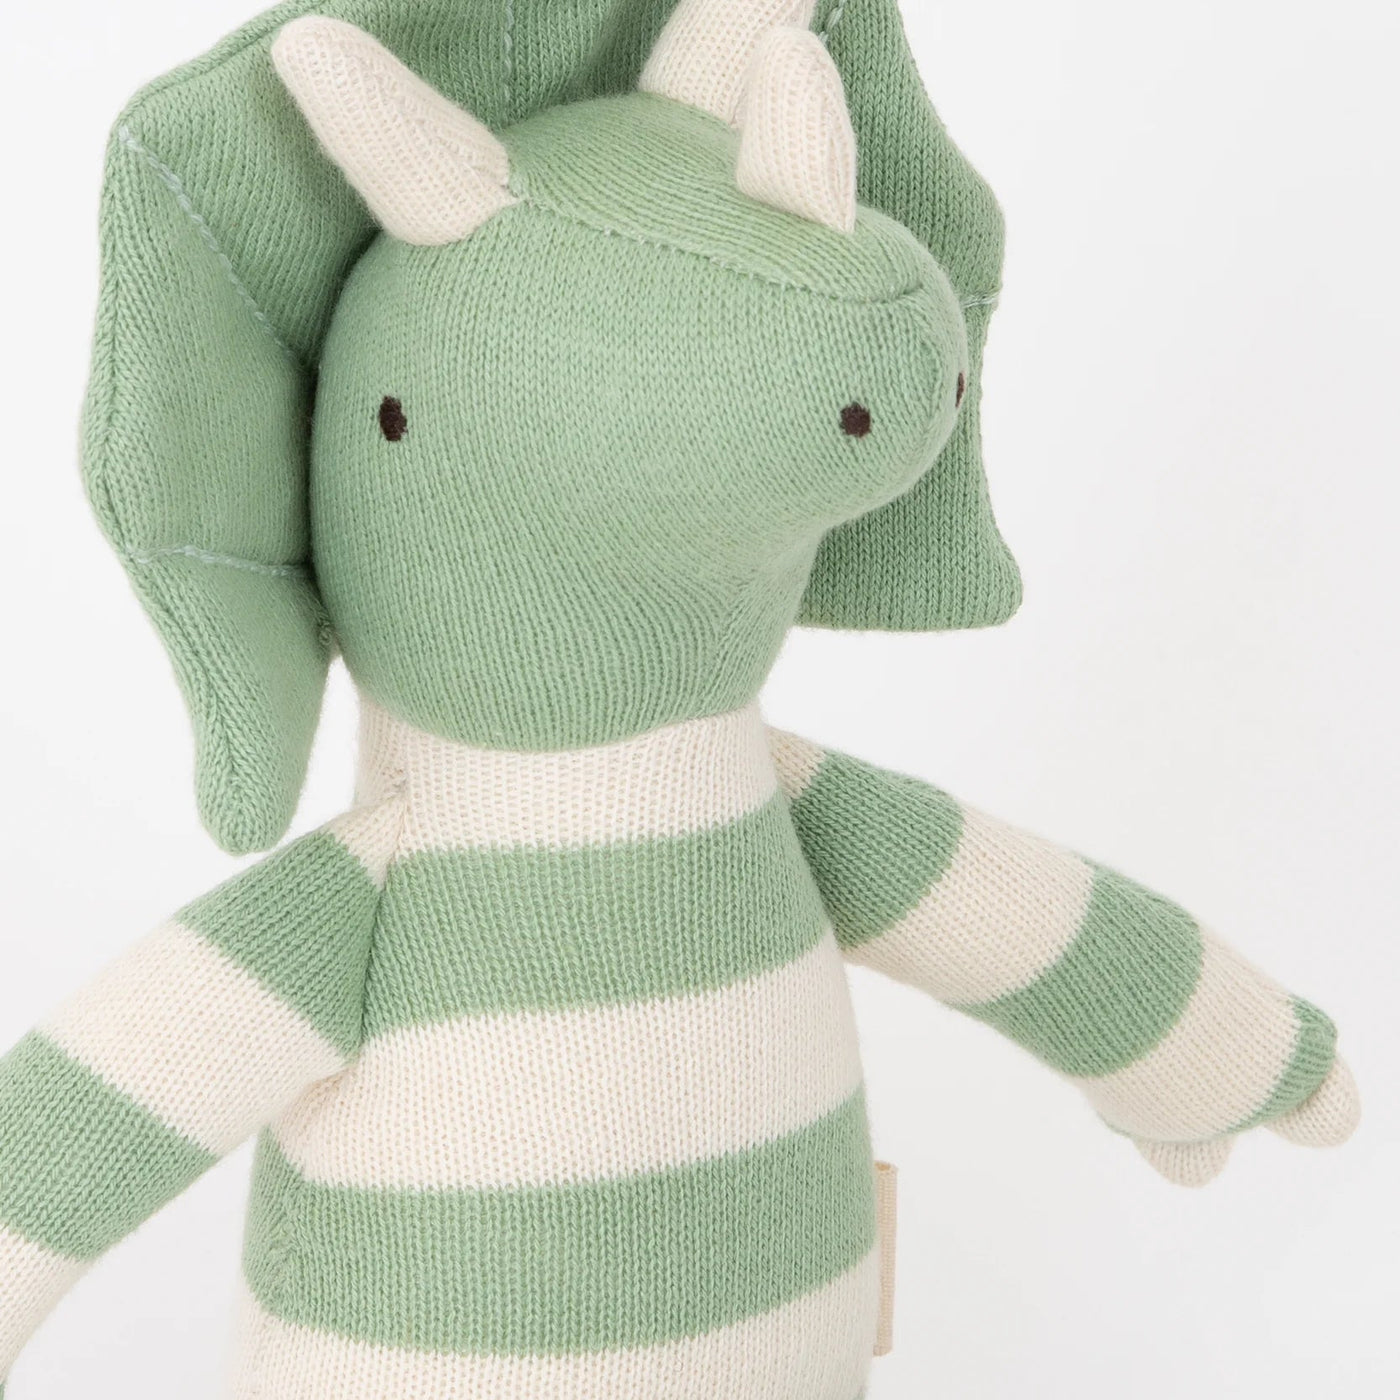 Meri Meri Dinosaur Knitted Toy